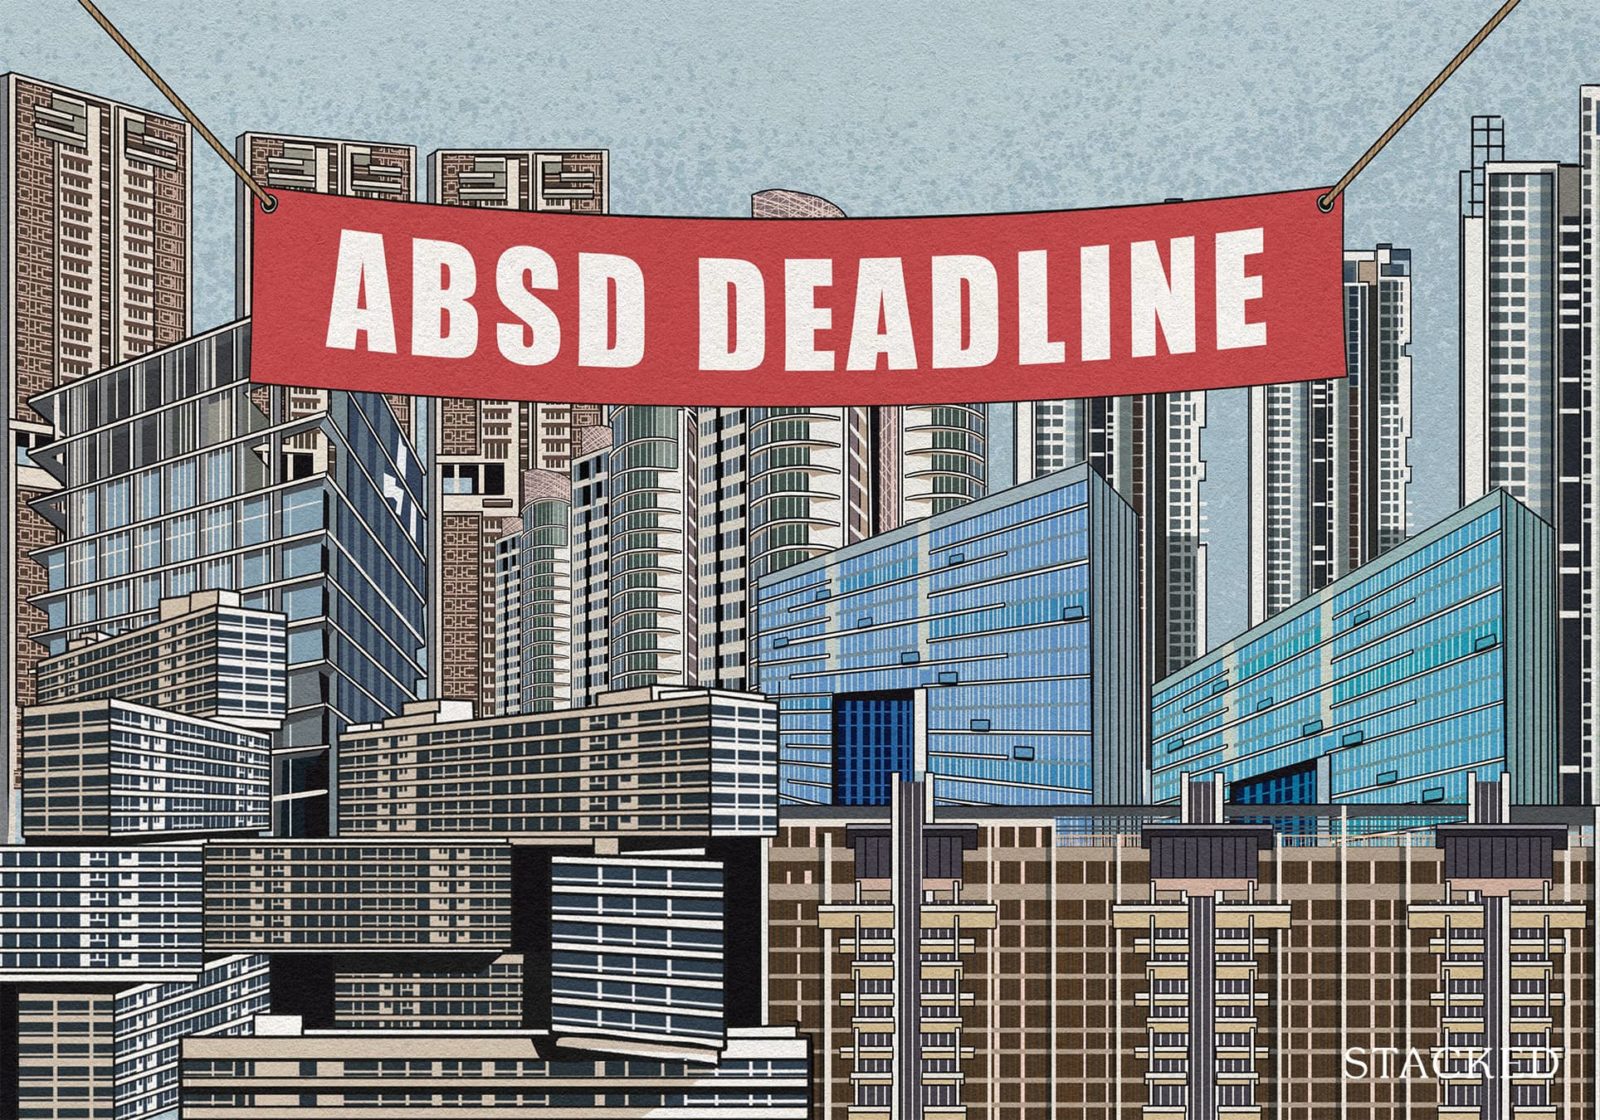 absd deadline